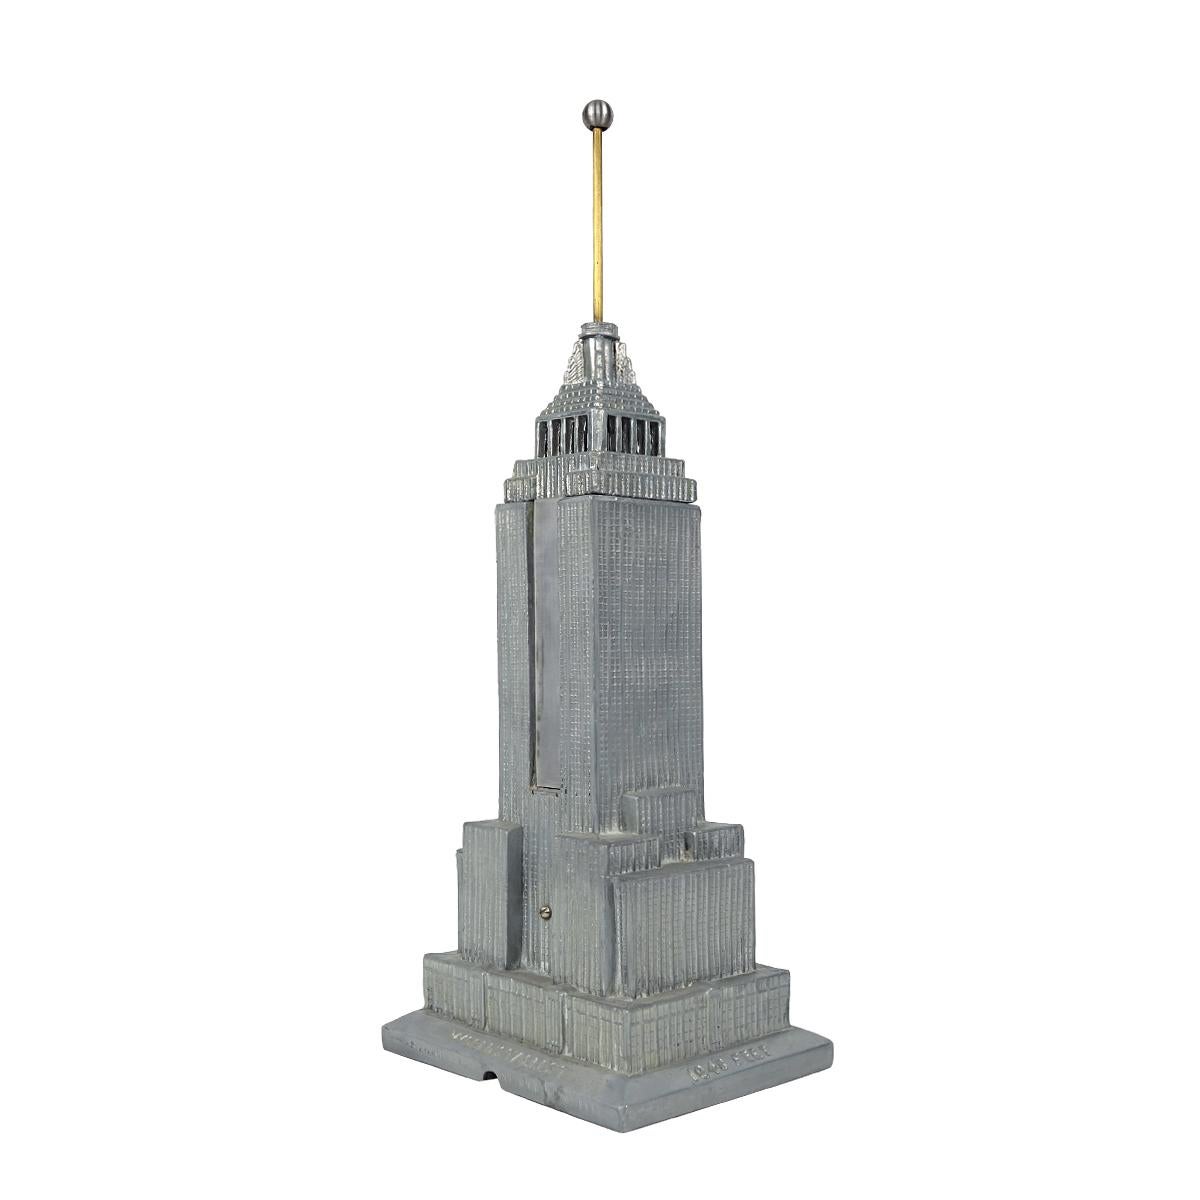 Art Deco Table Lamp by Sarsaparilla Deco Designs Model of Empire State Building For Sale